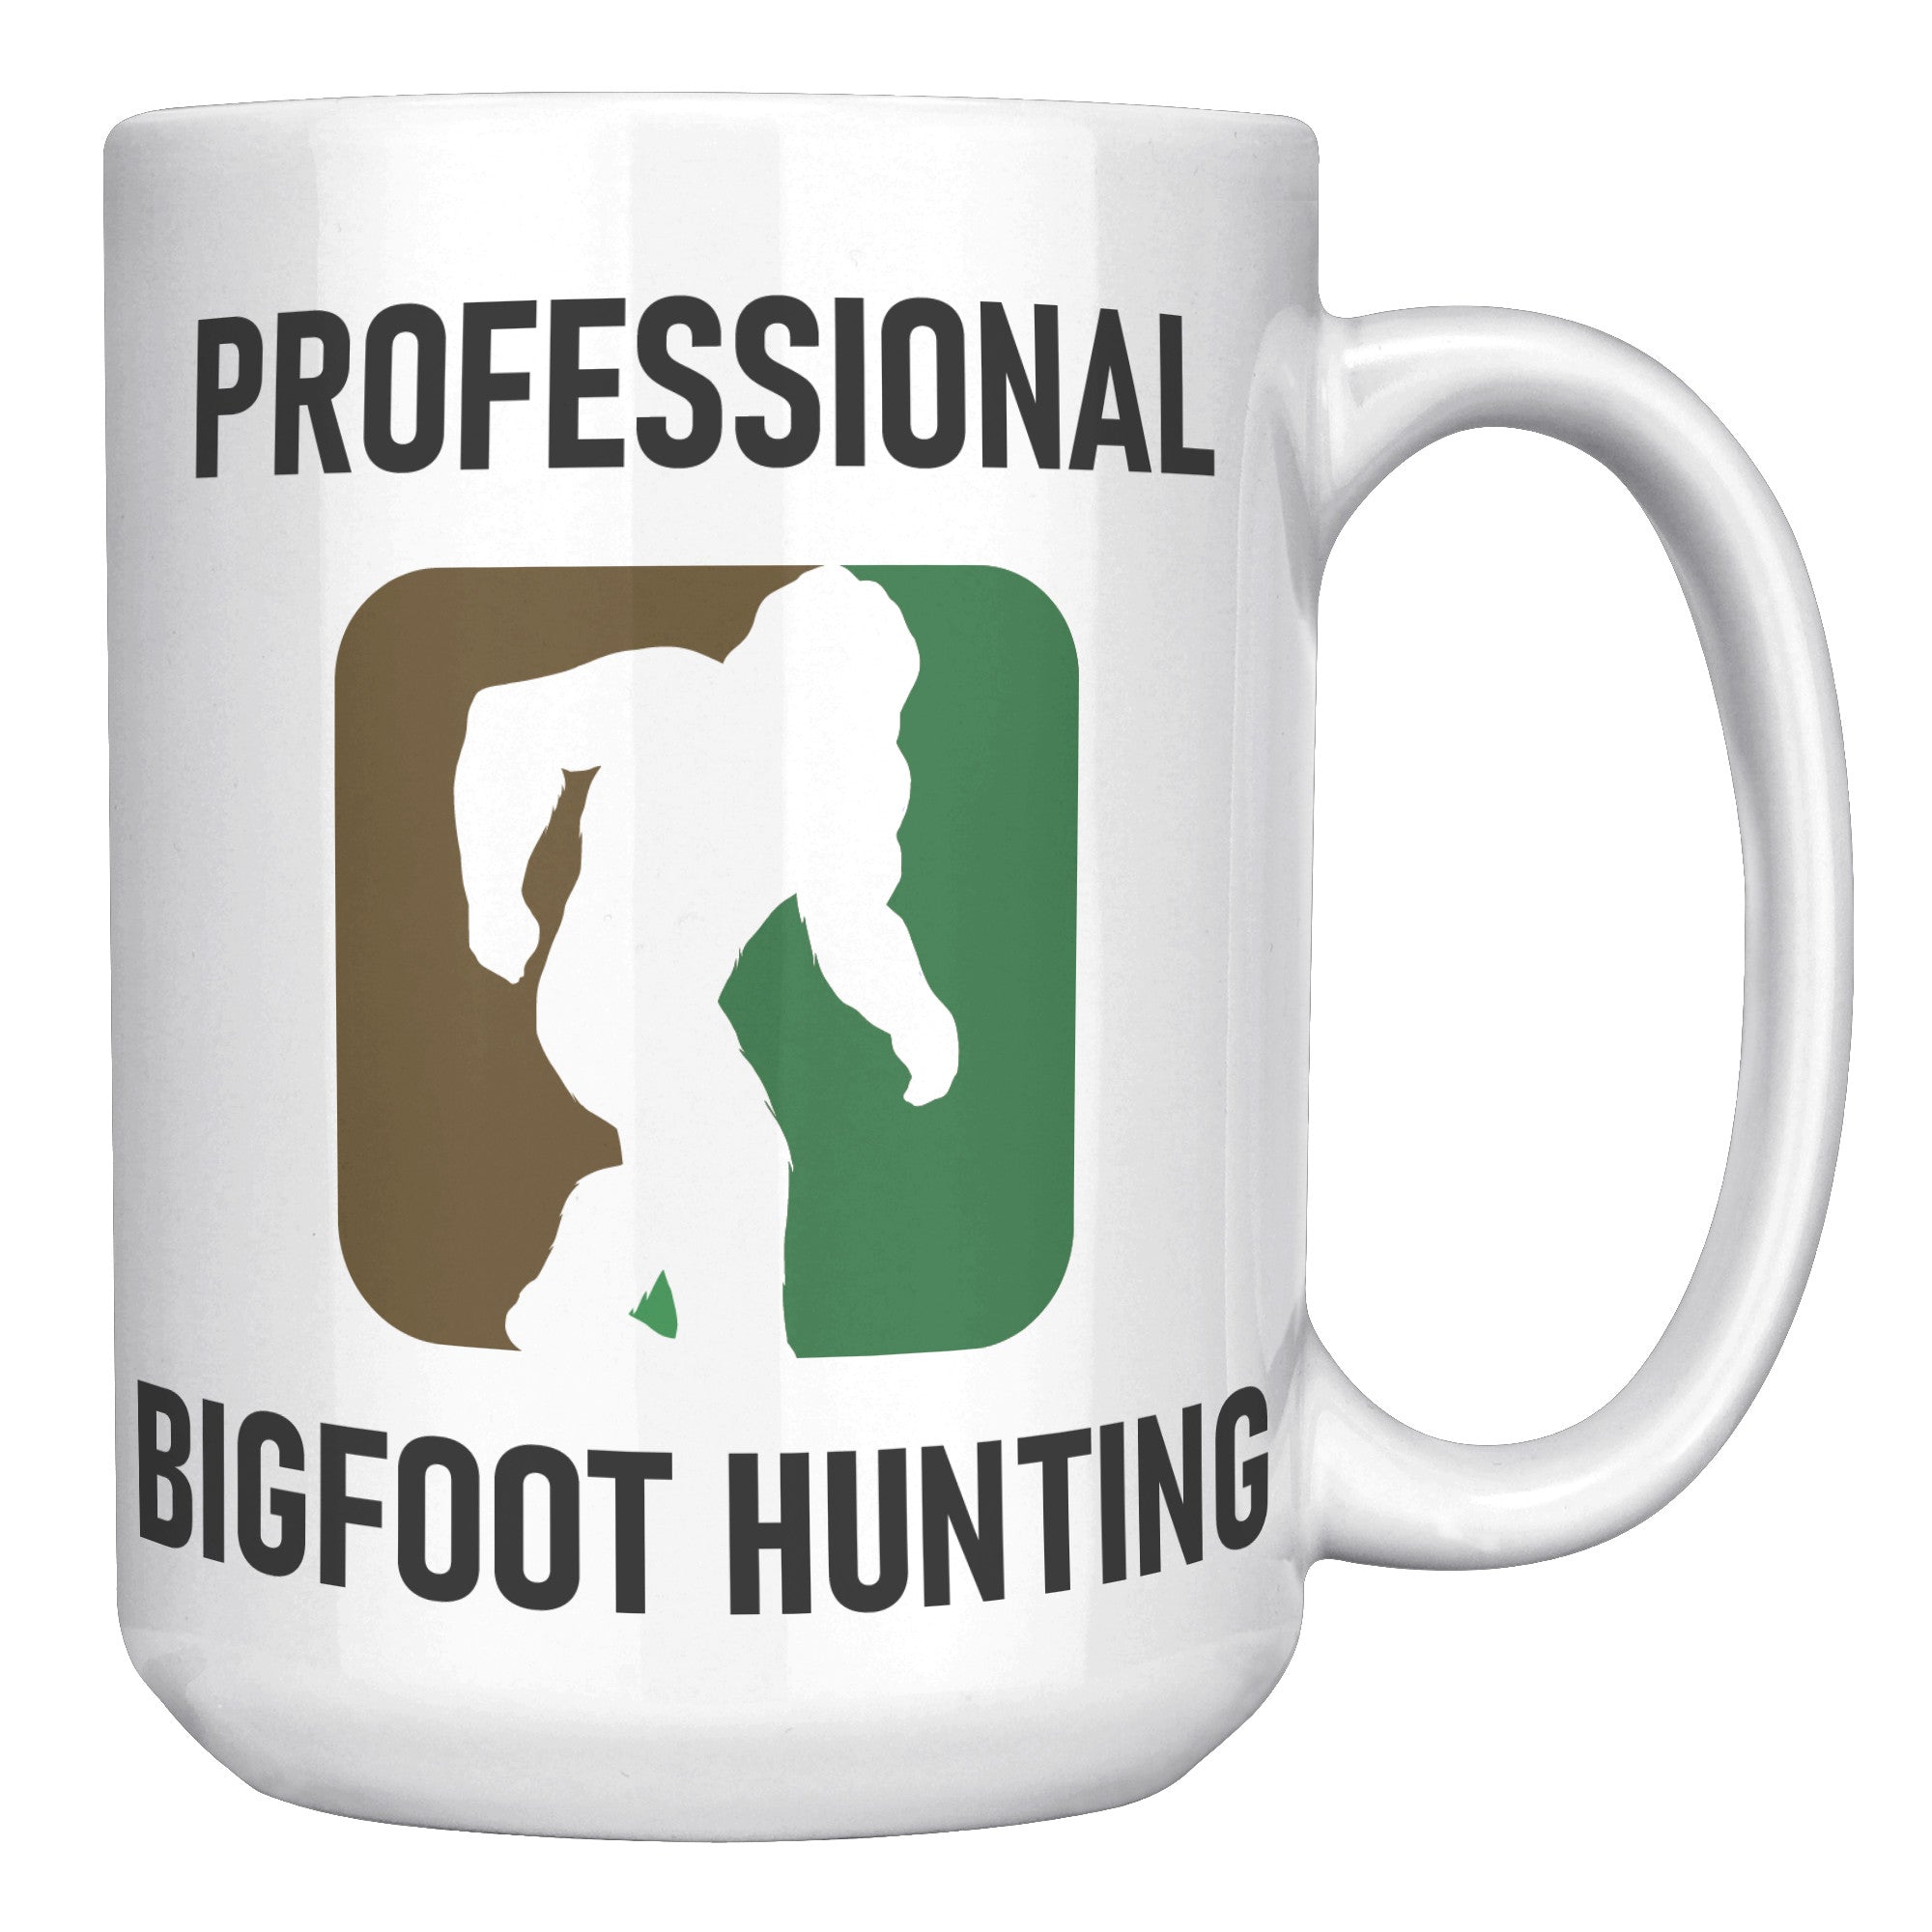 Professional Bigfoot Hunting Mug